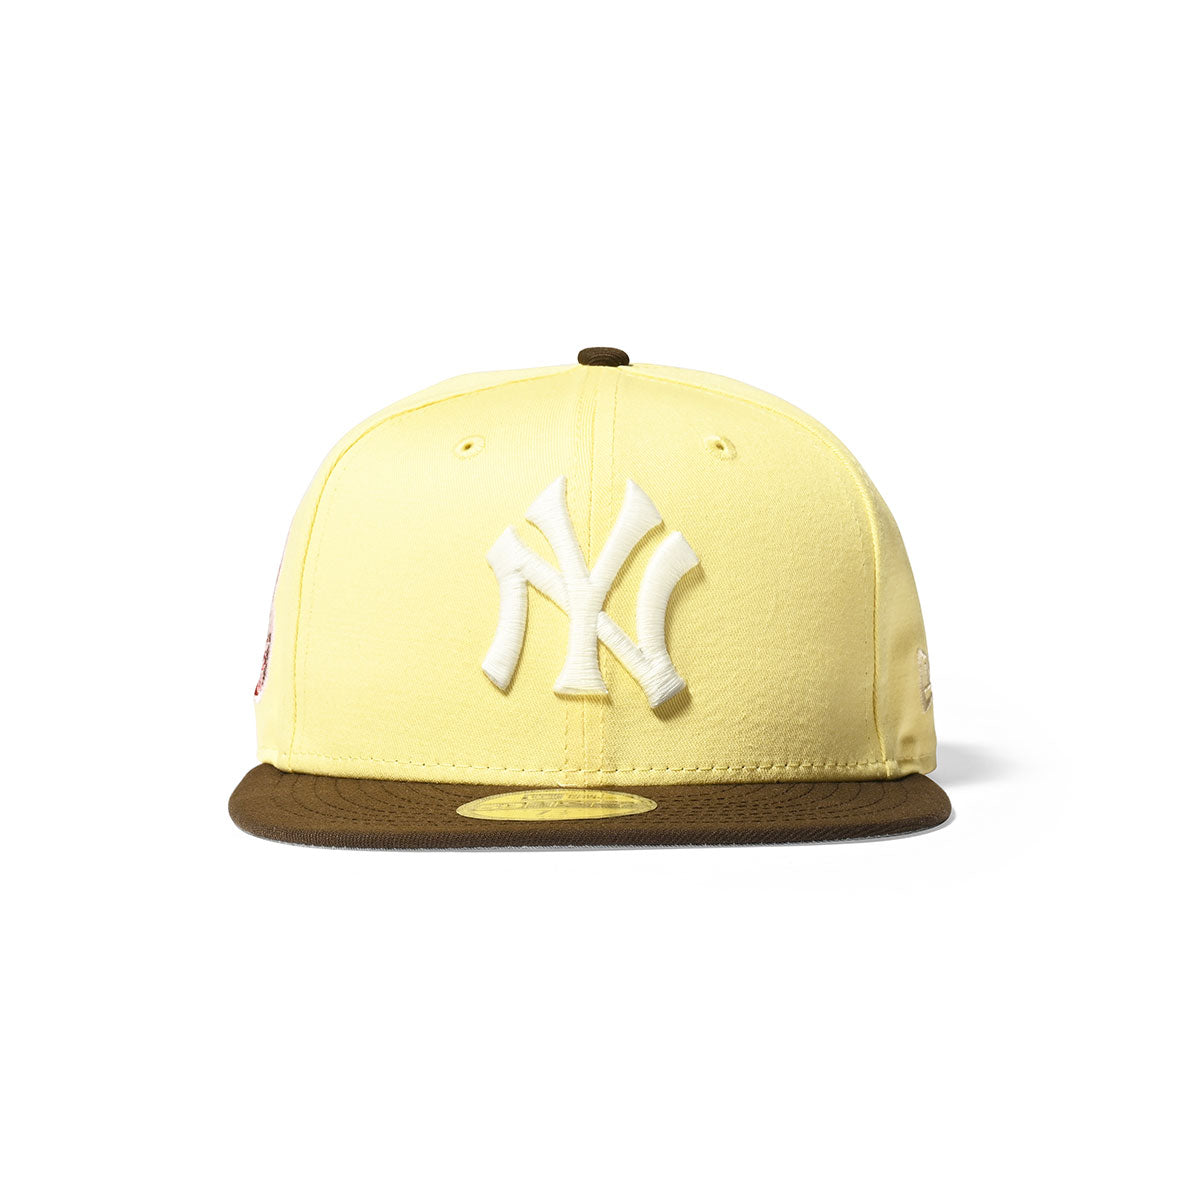 NEW ERA New York Yankees - 59FIFTY 1952 WS SOFT YELLOW/WALNUT【70815003】